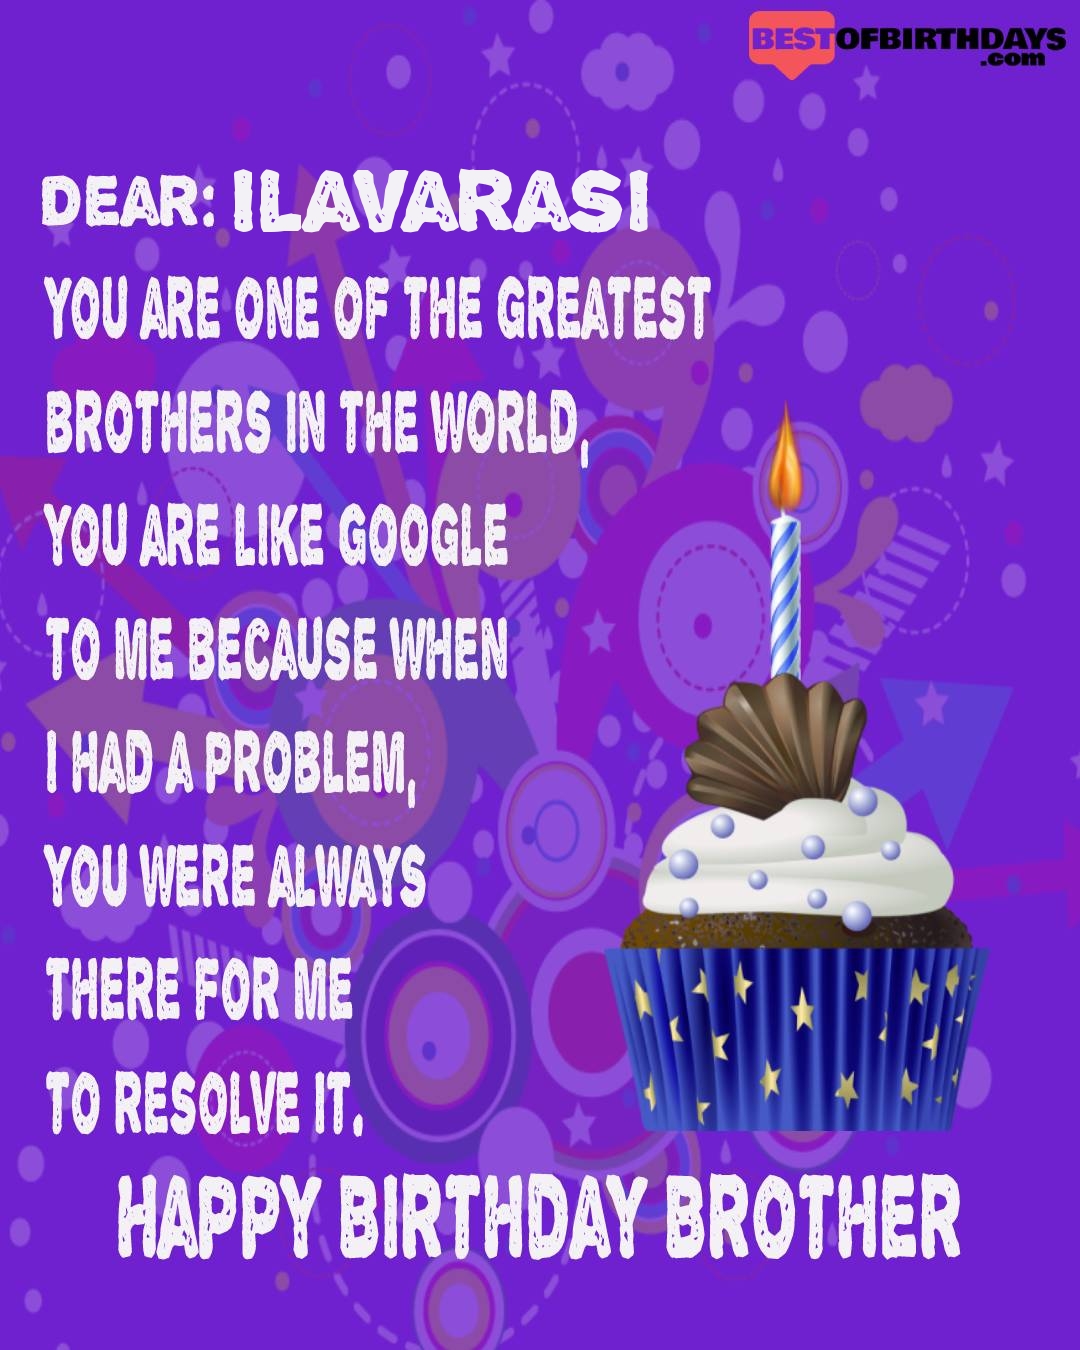 Happy birthday ilavarasi bhai brother bro